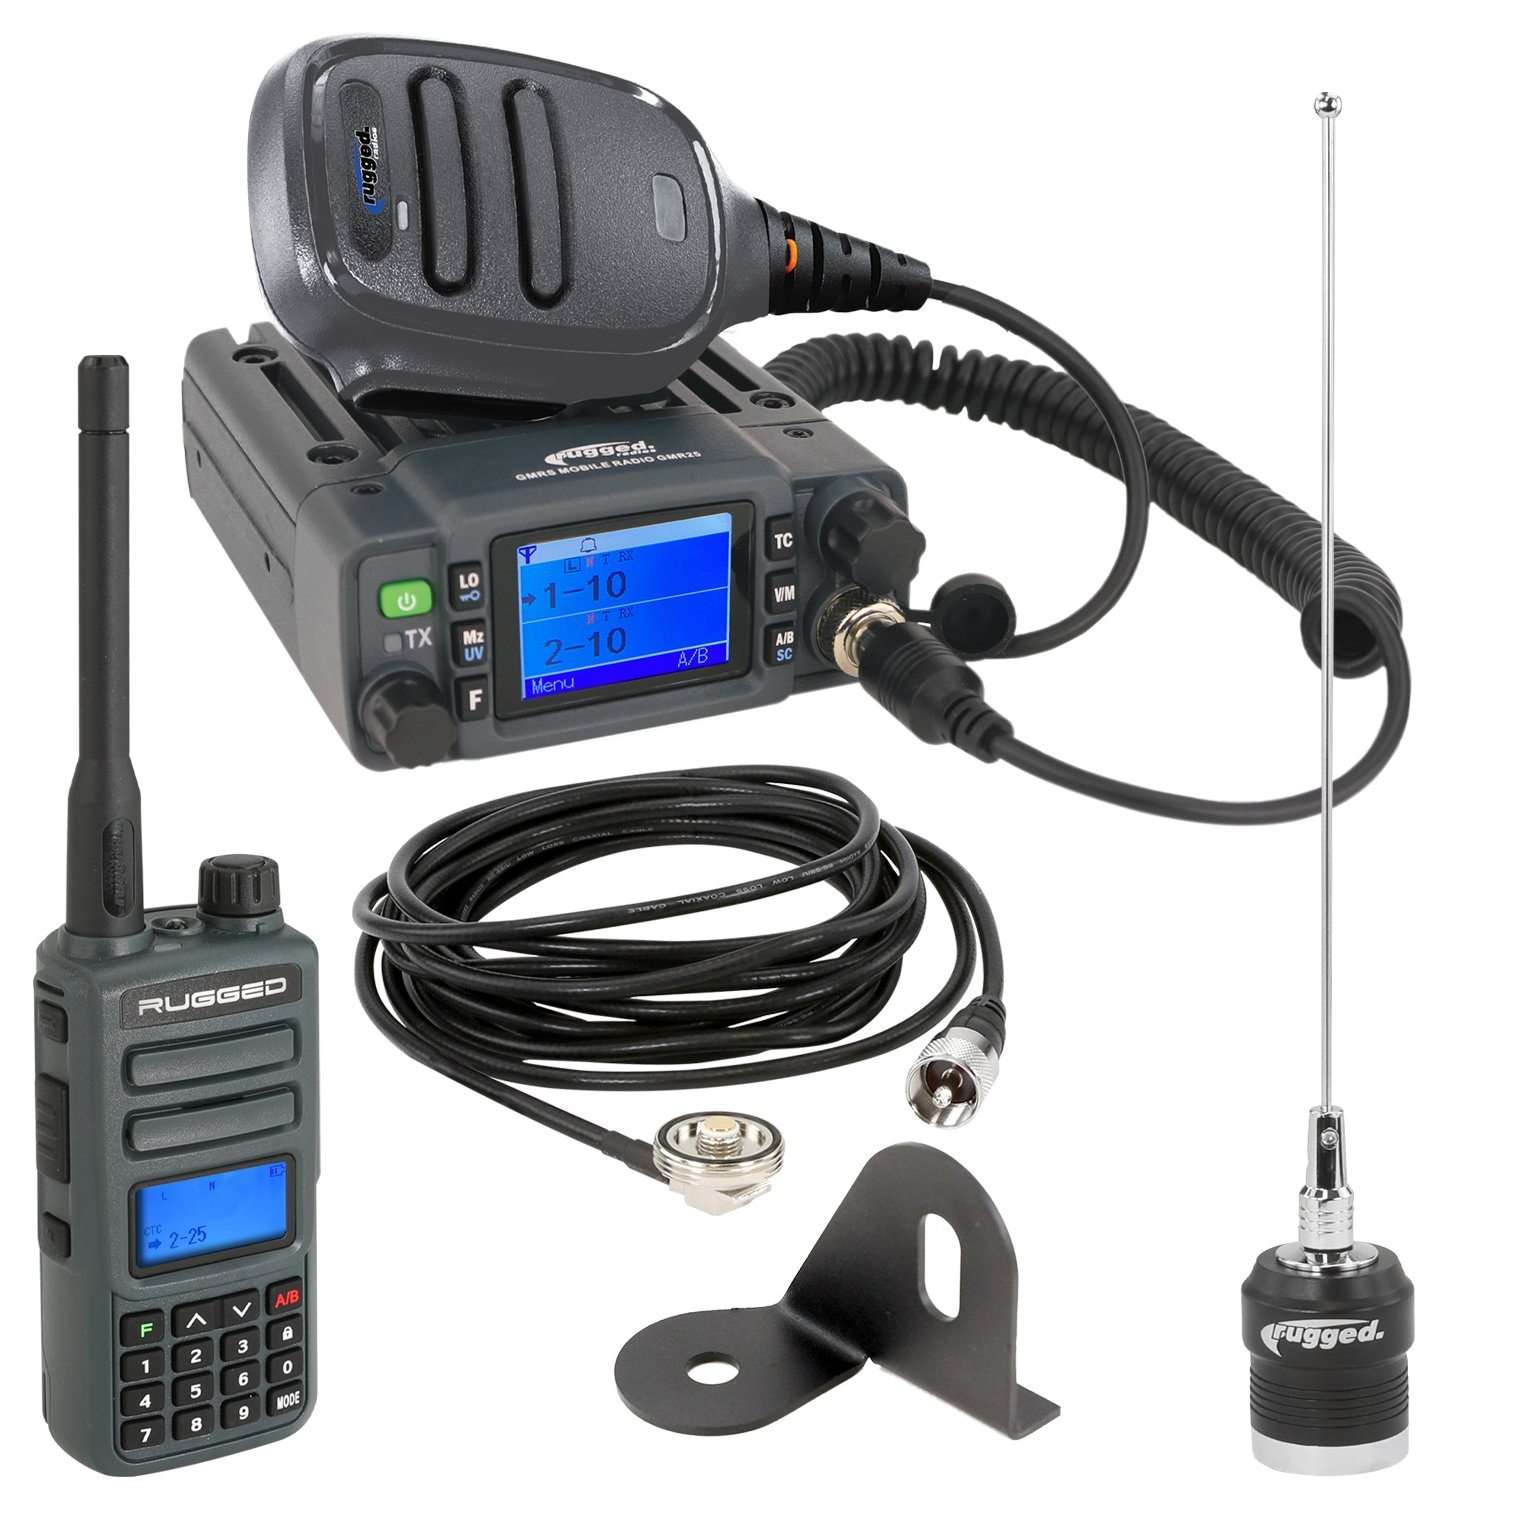 Jeep Radio Kit - GMR25 Waterproof GMRS Mobile Radio and GMR2 Handheld